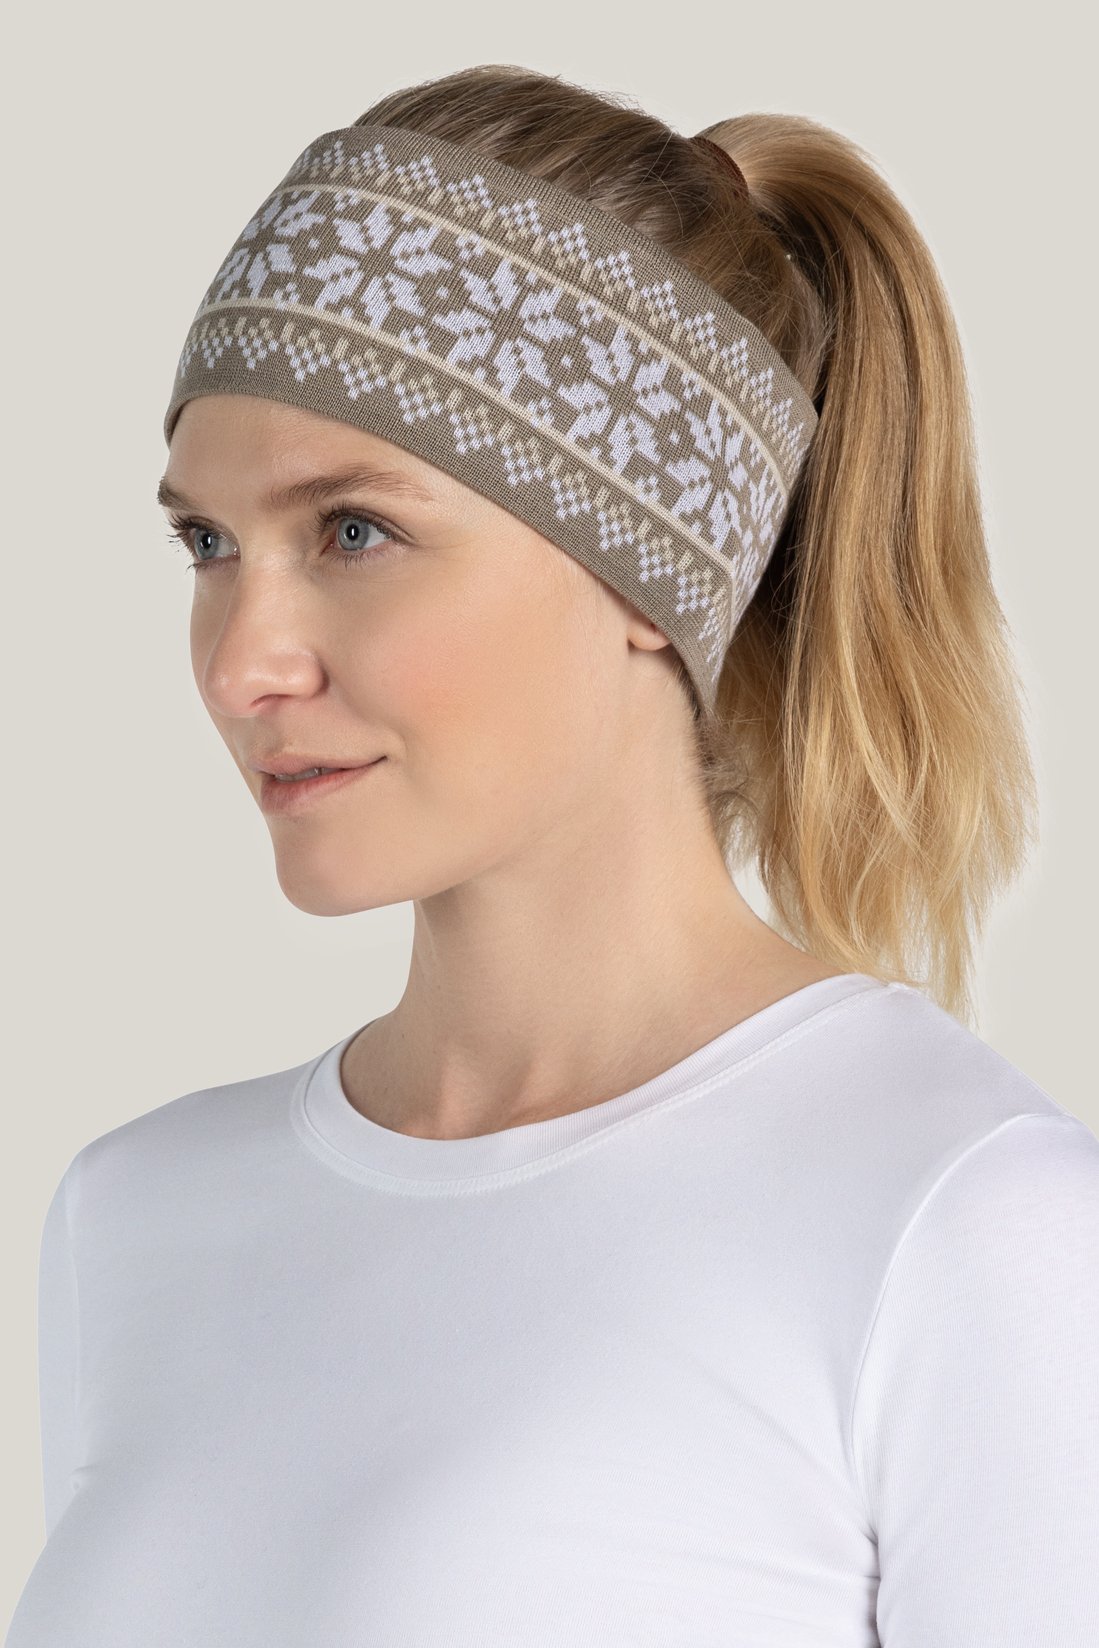 Beige reversible unisex headband made of merino wool and Tencel from TIDLØS